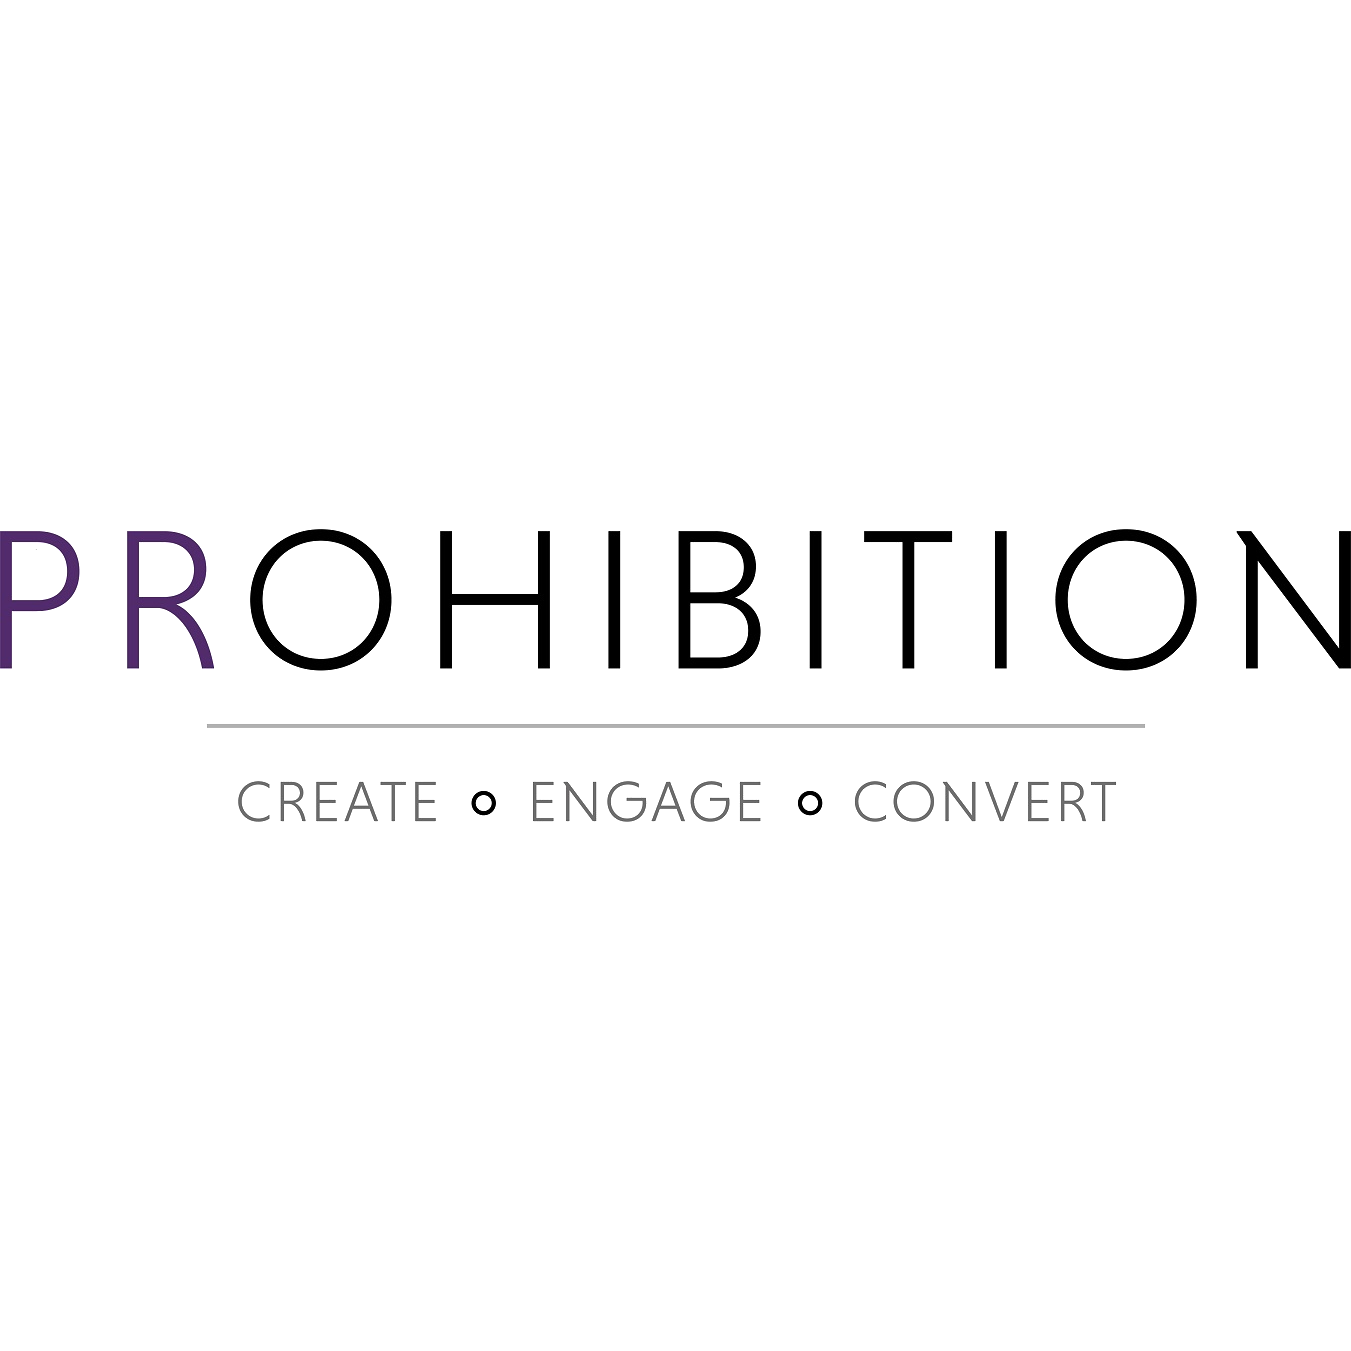 Prohibition logo